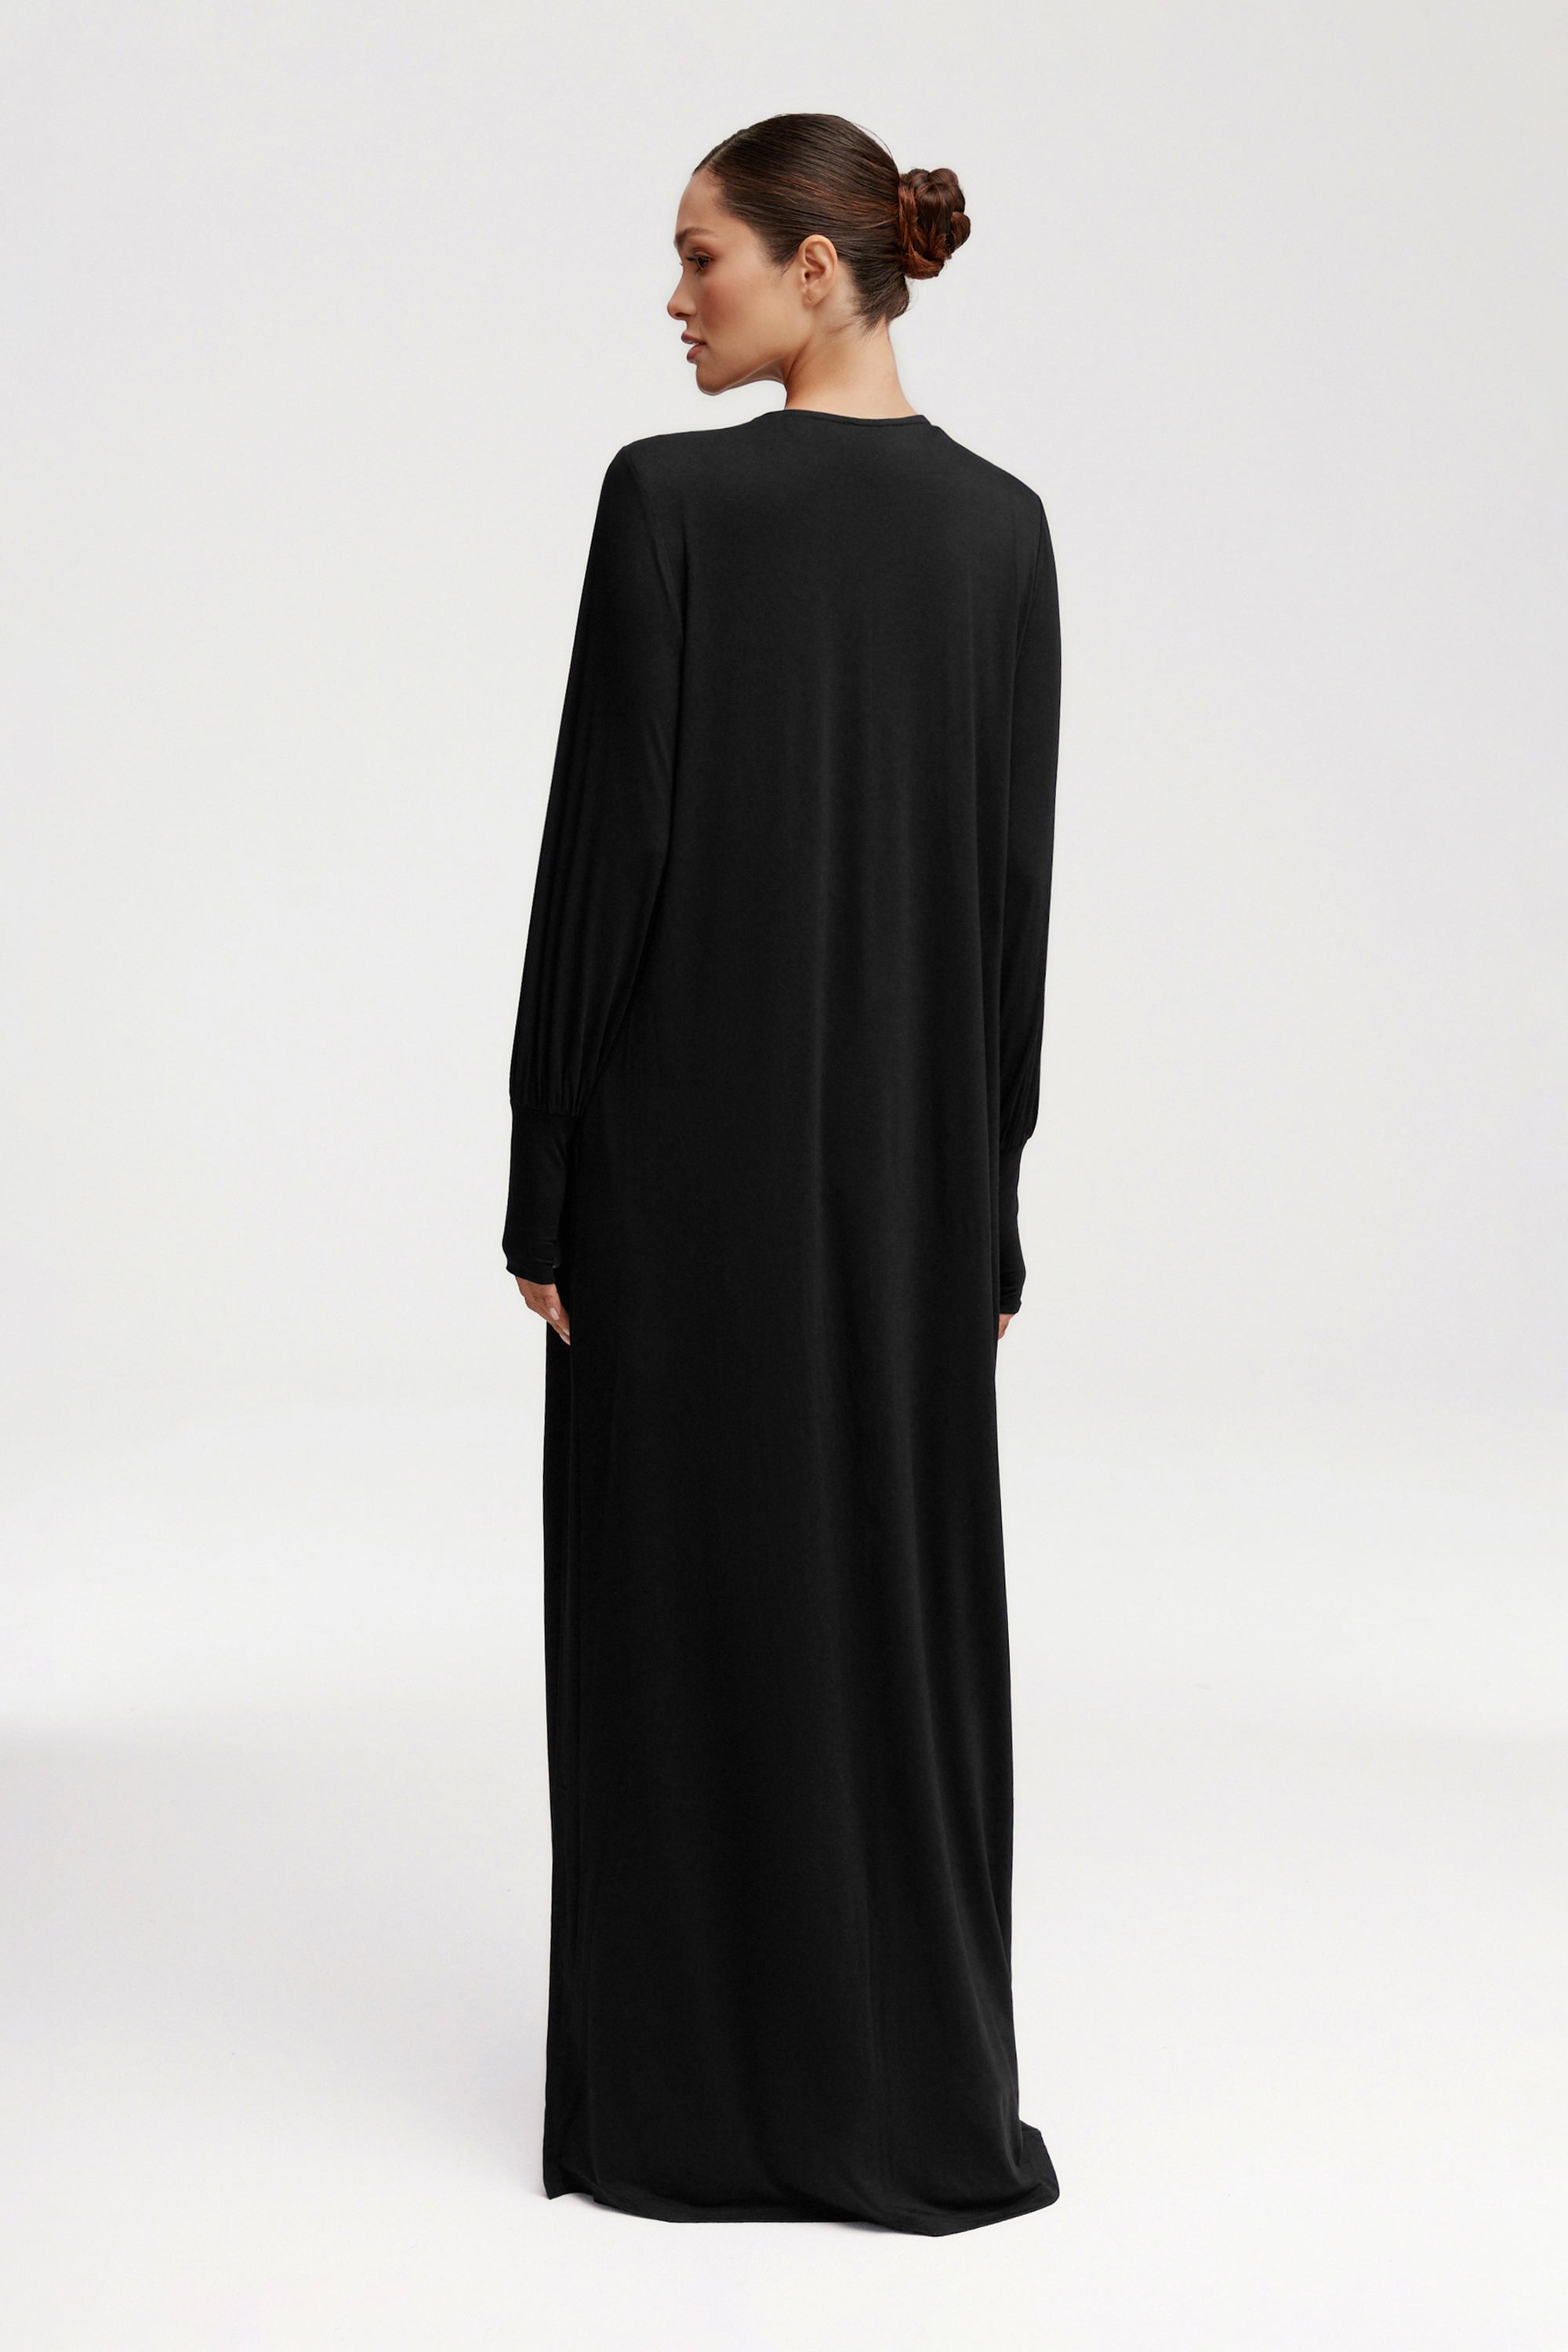 Jenin Jersey Open Abaya - Black Clothing Veiled 